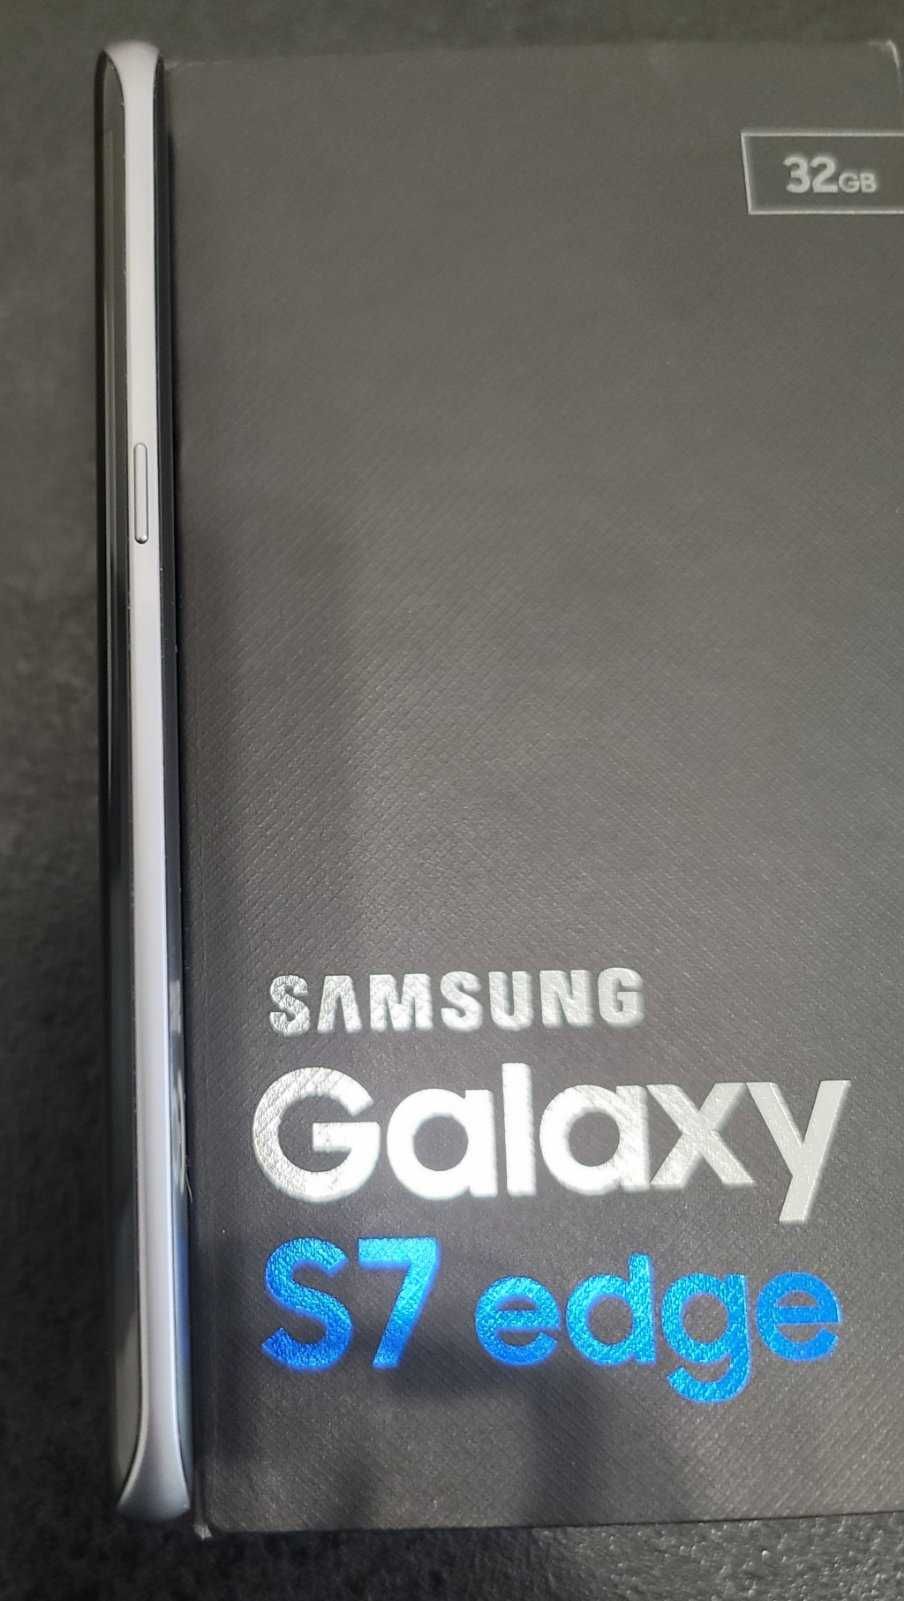 Samsung SM-G935F Galaxy S7 Edge 32GB Black Onyx б/в в гарному стані.